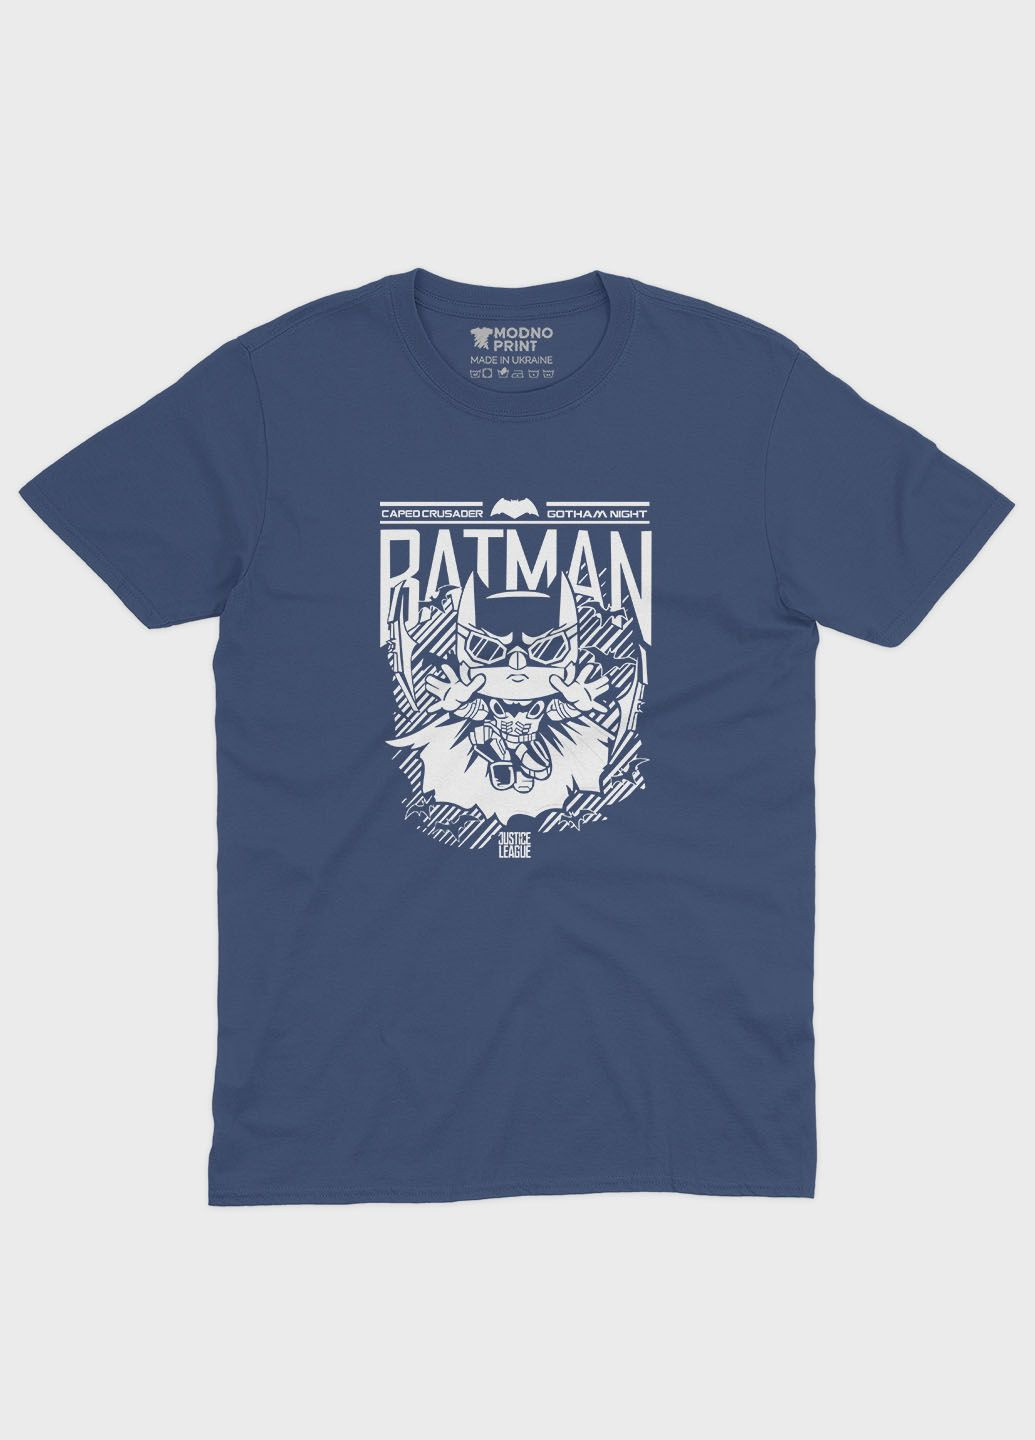 Темно-синяя летняя мужская футболка с принтом супергероя - бэтмен (ts001-1-nav-006-003-041-f) Modno